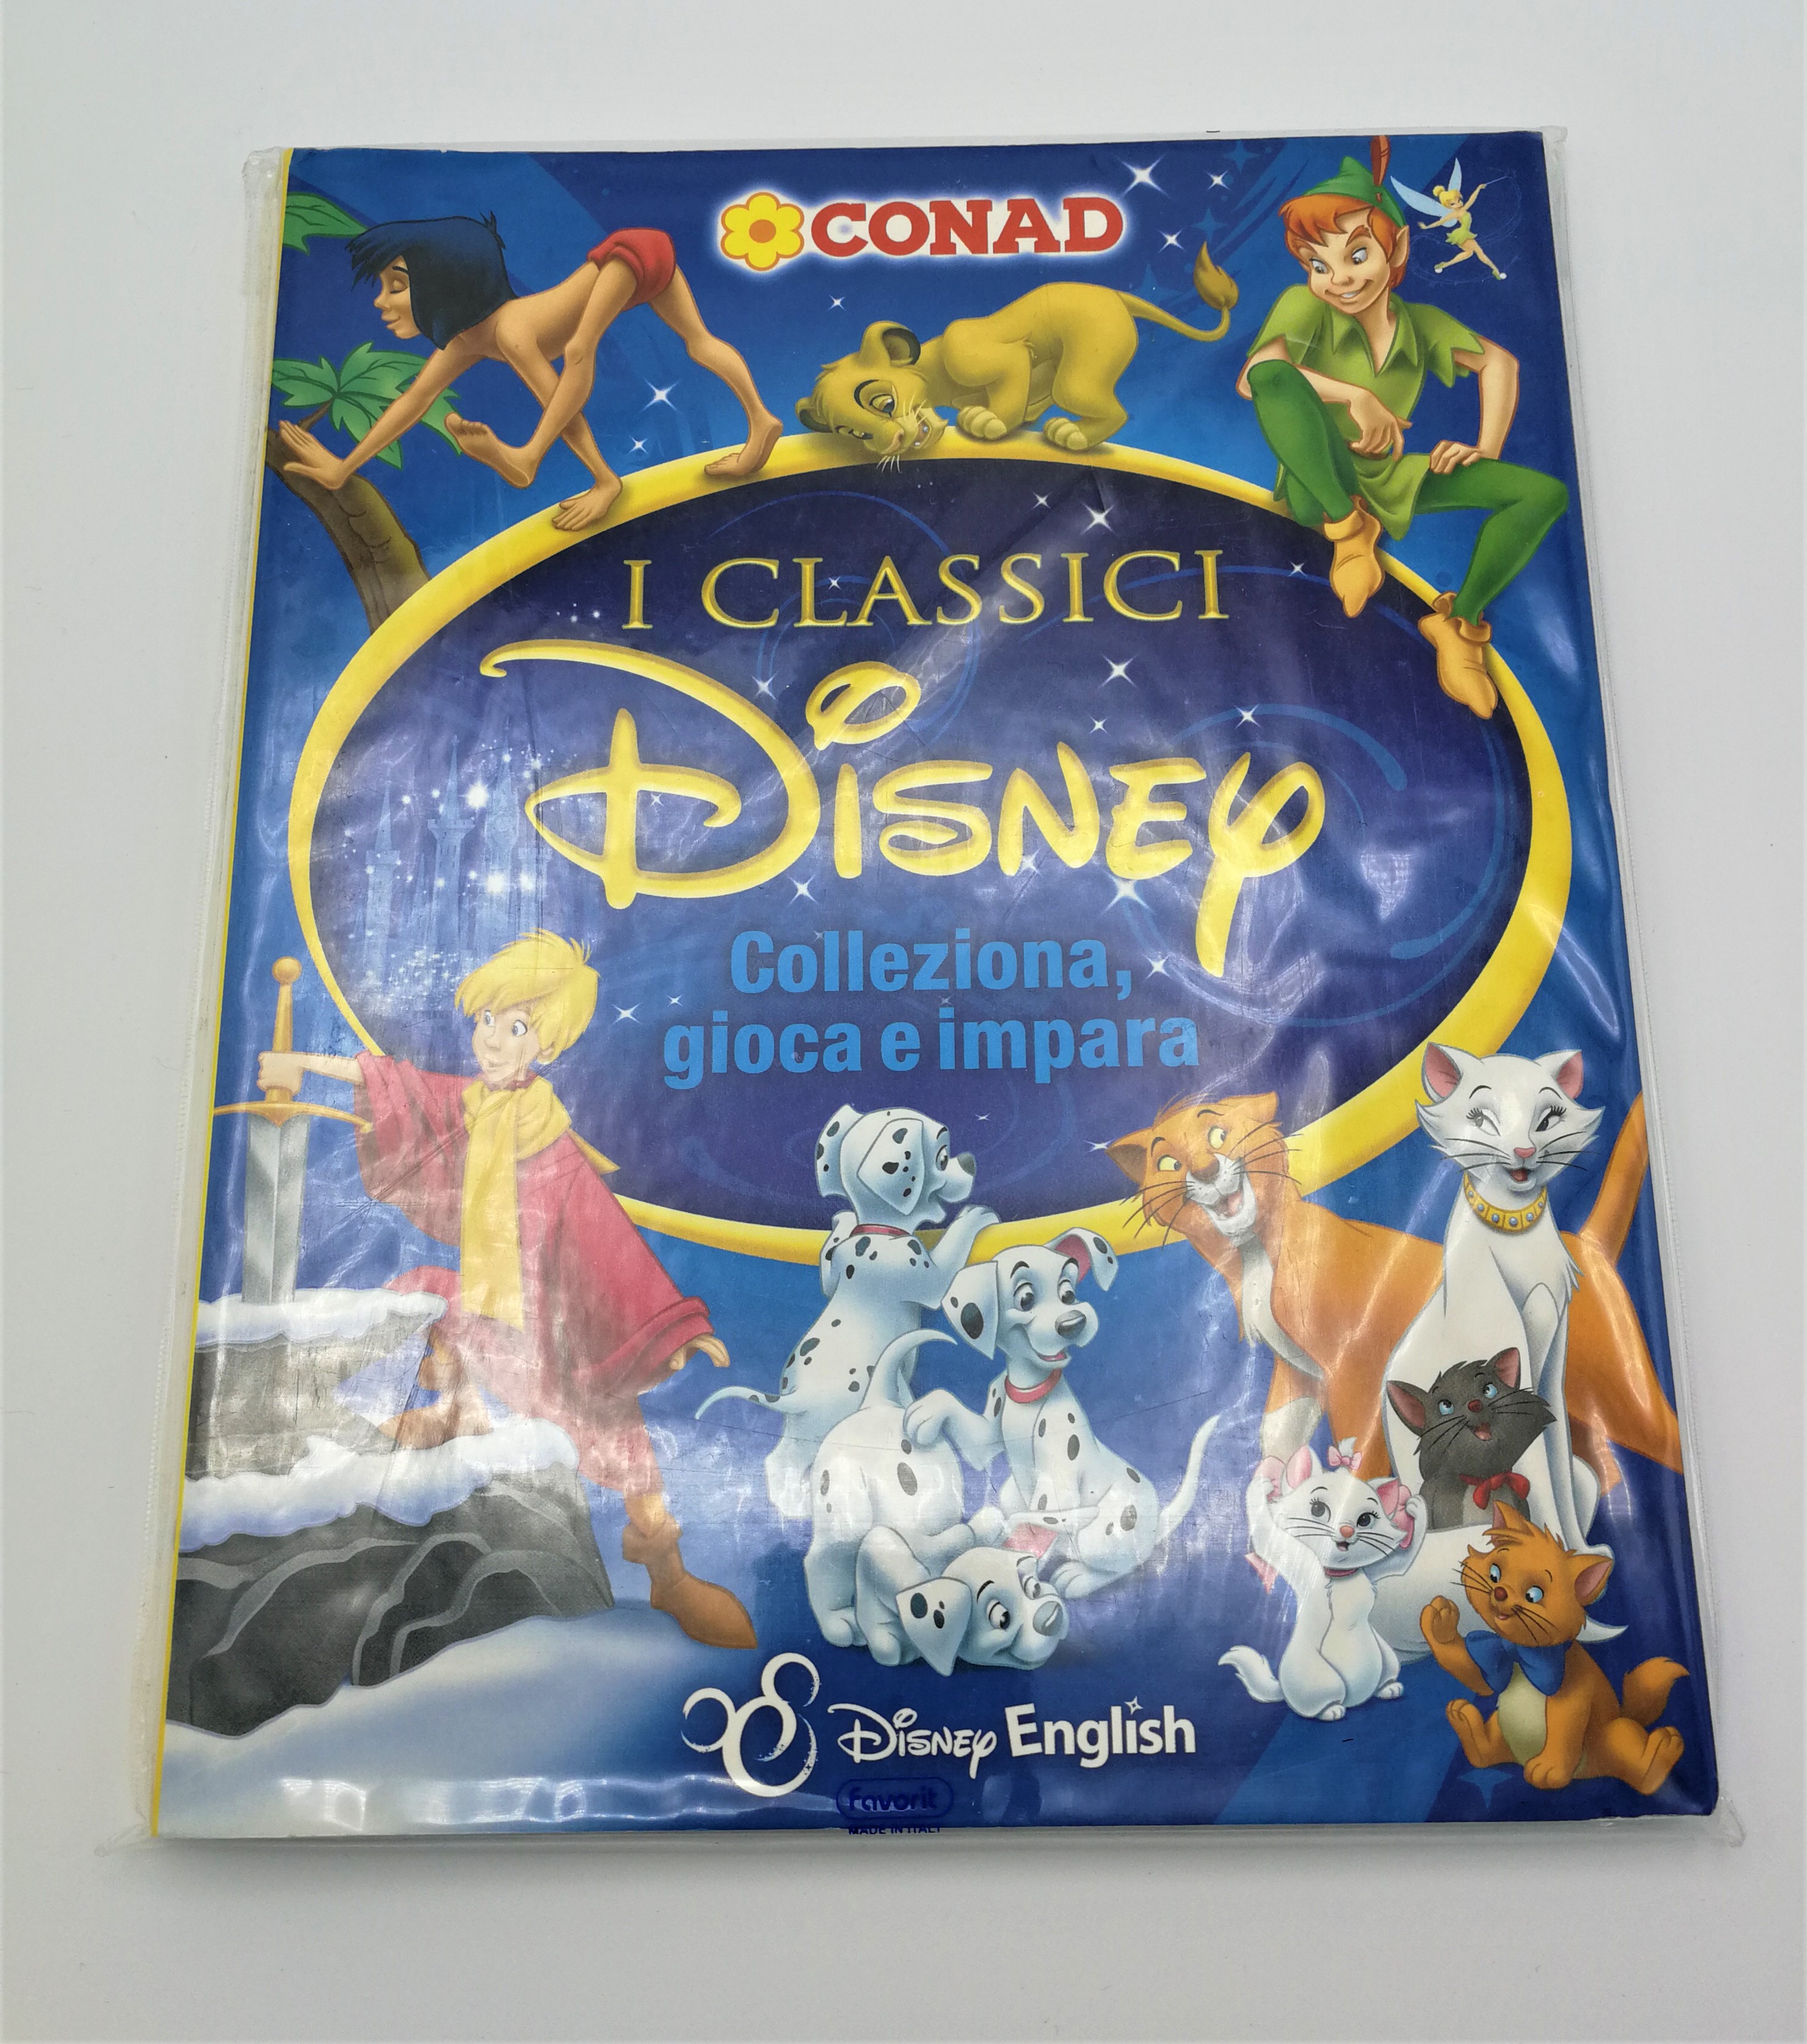 I Classici Disney album figurine card completo Supermercati Conad -  manuelkant